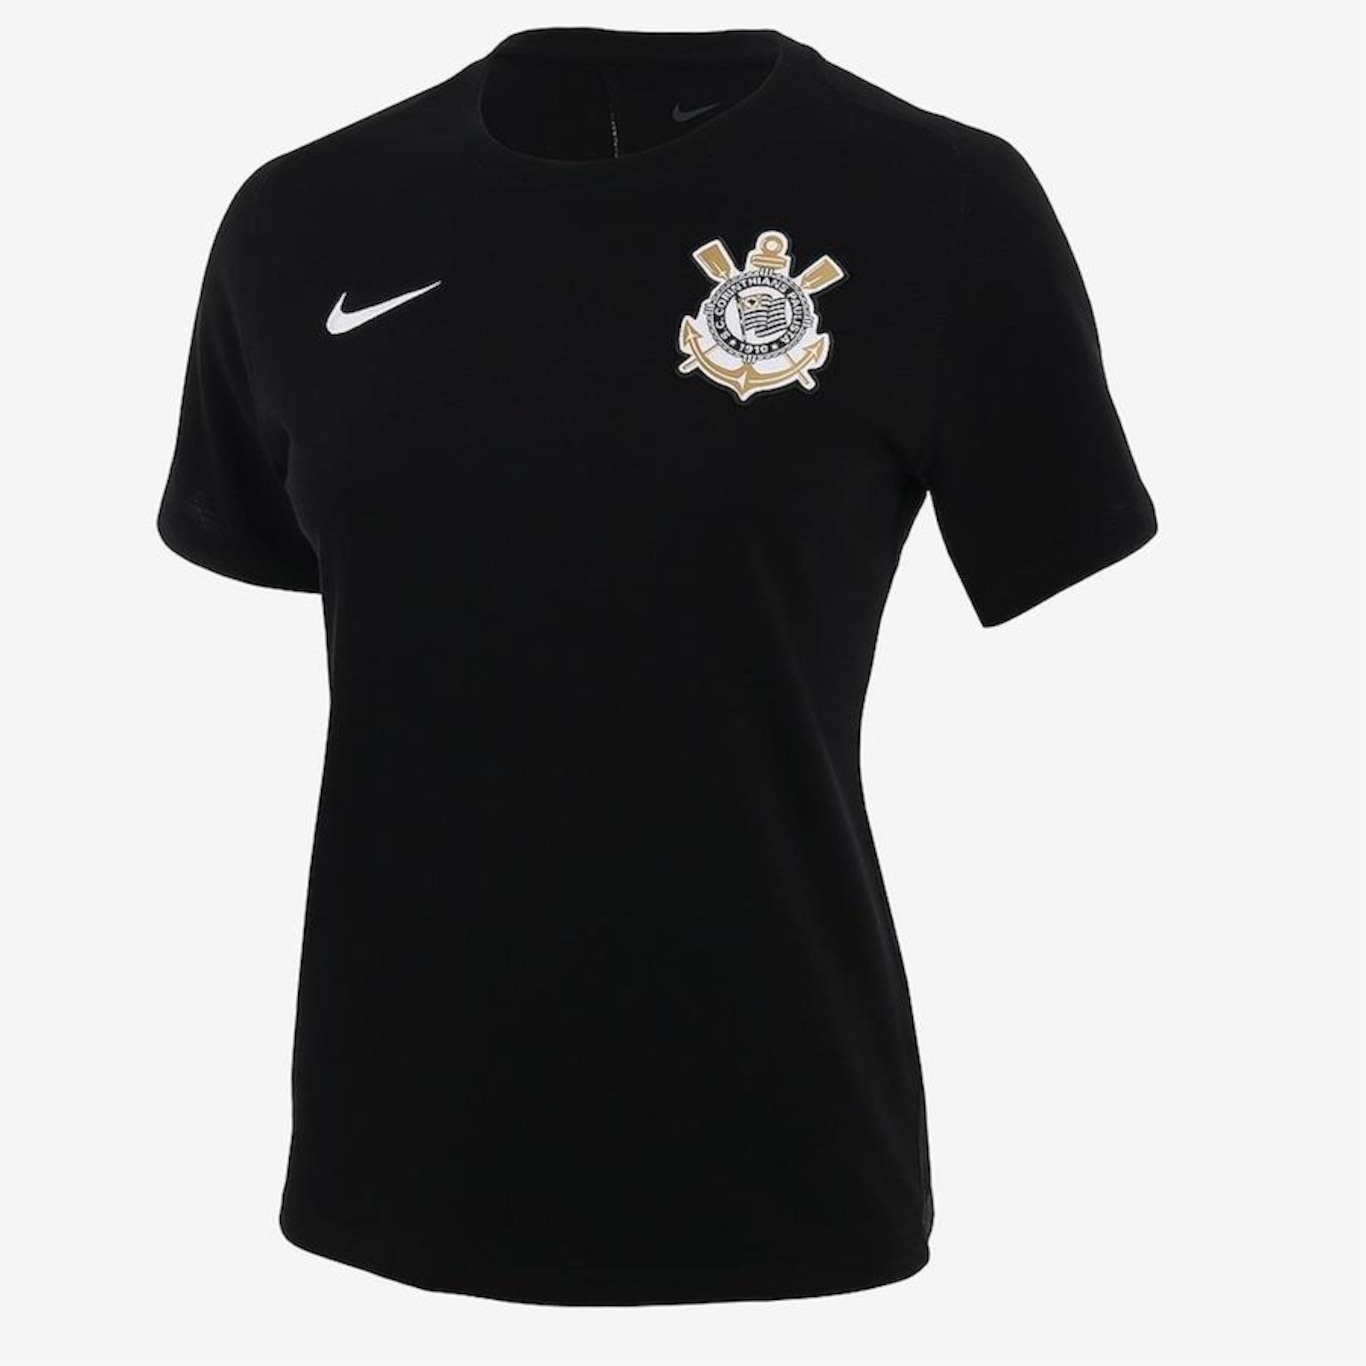 Corinthians - Camisa do Corinthians, Boné, Blusa - Centauro